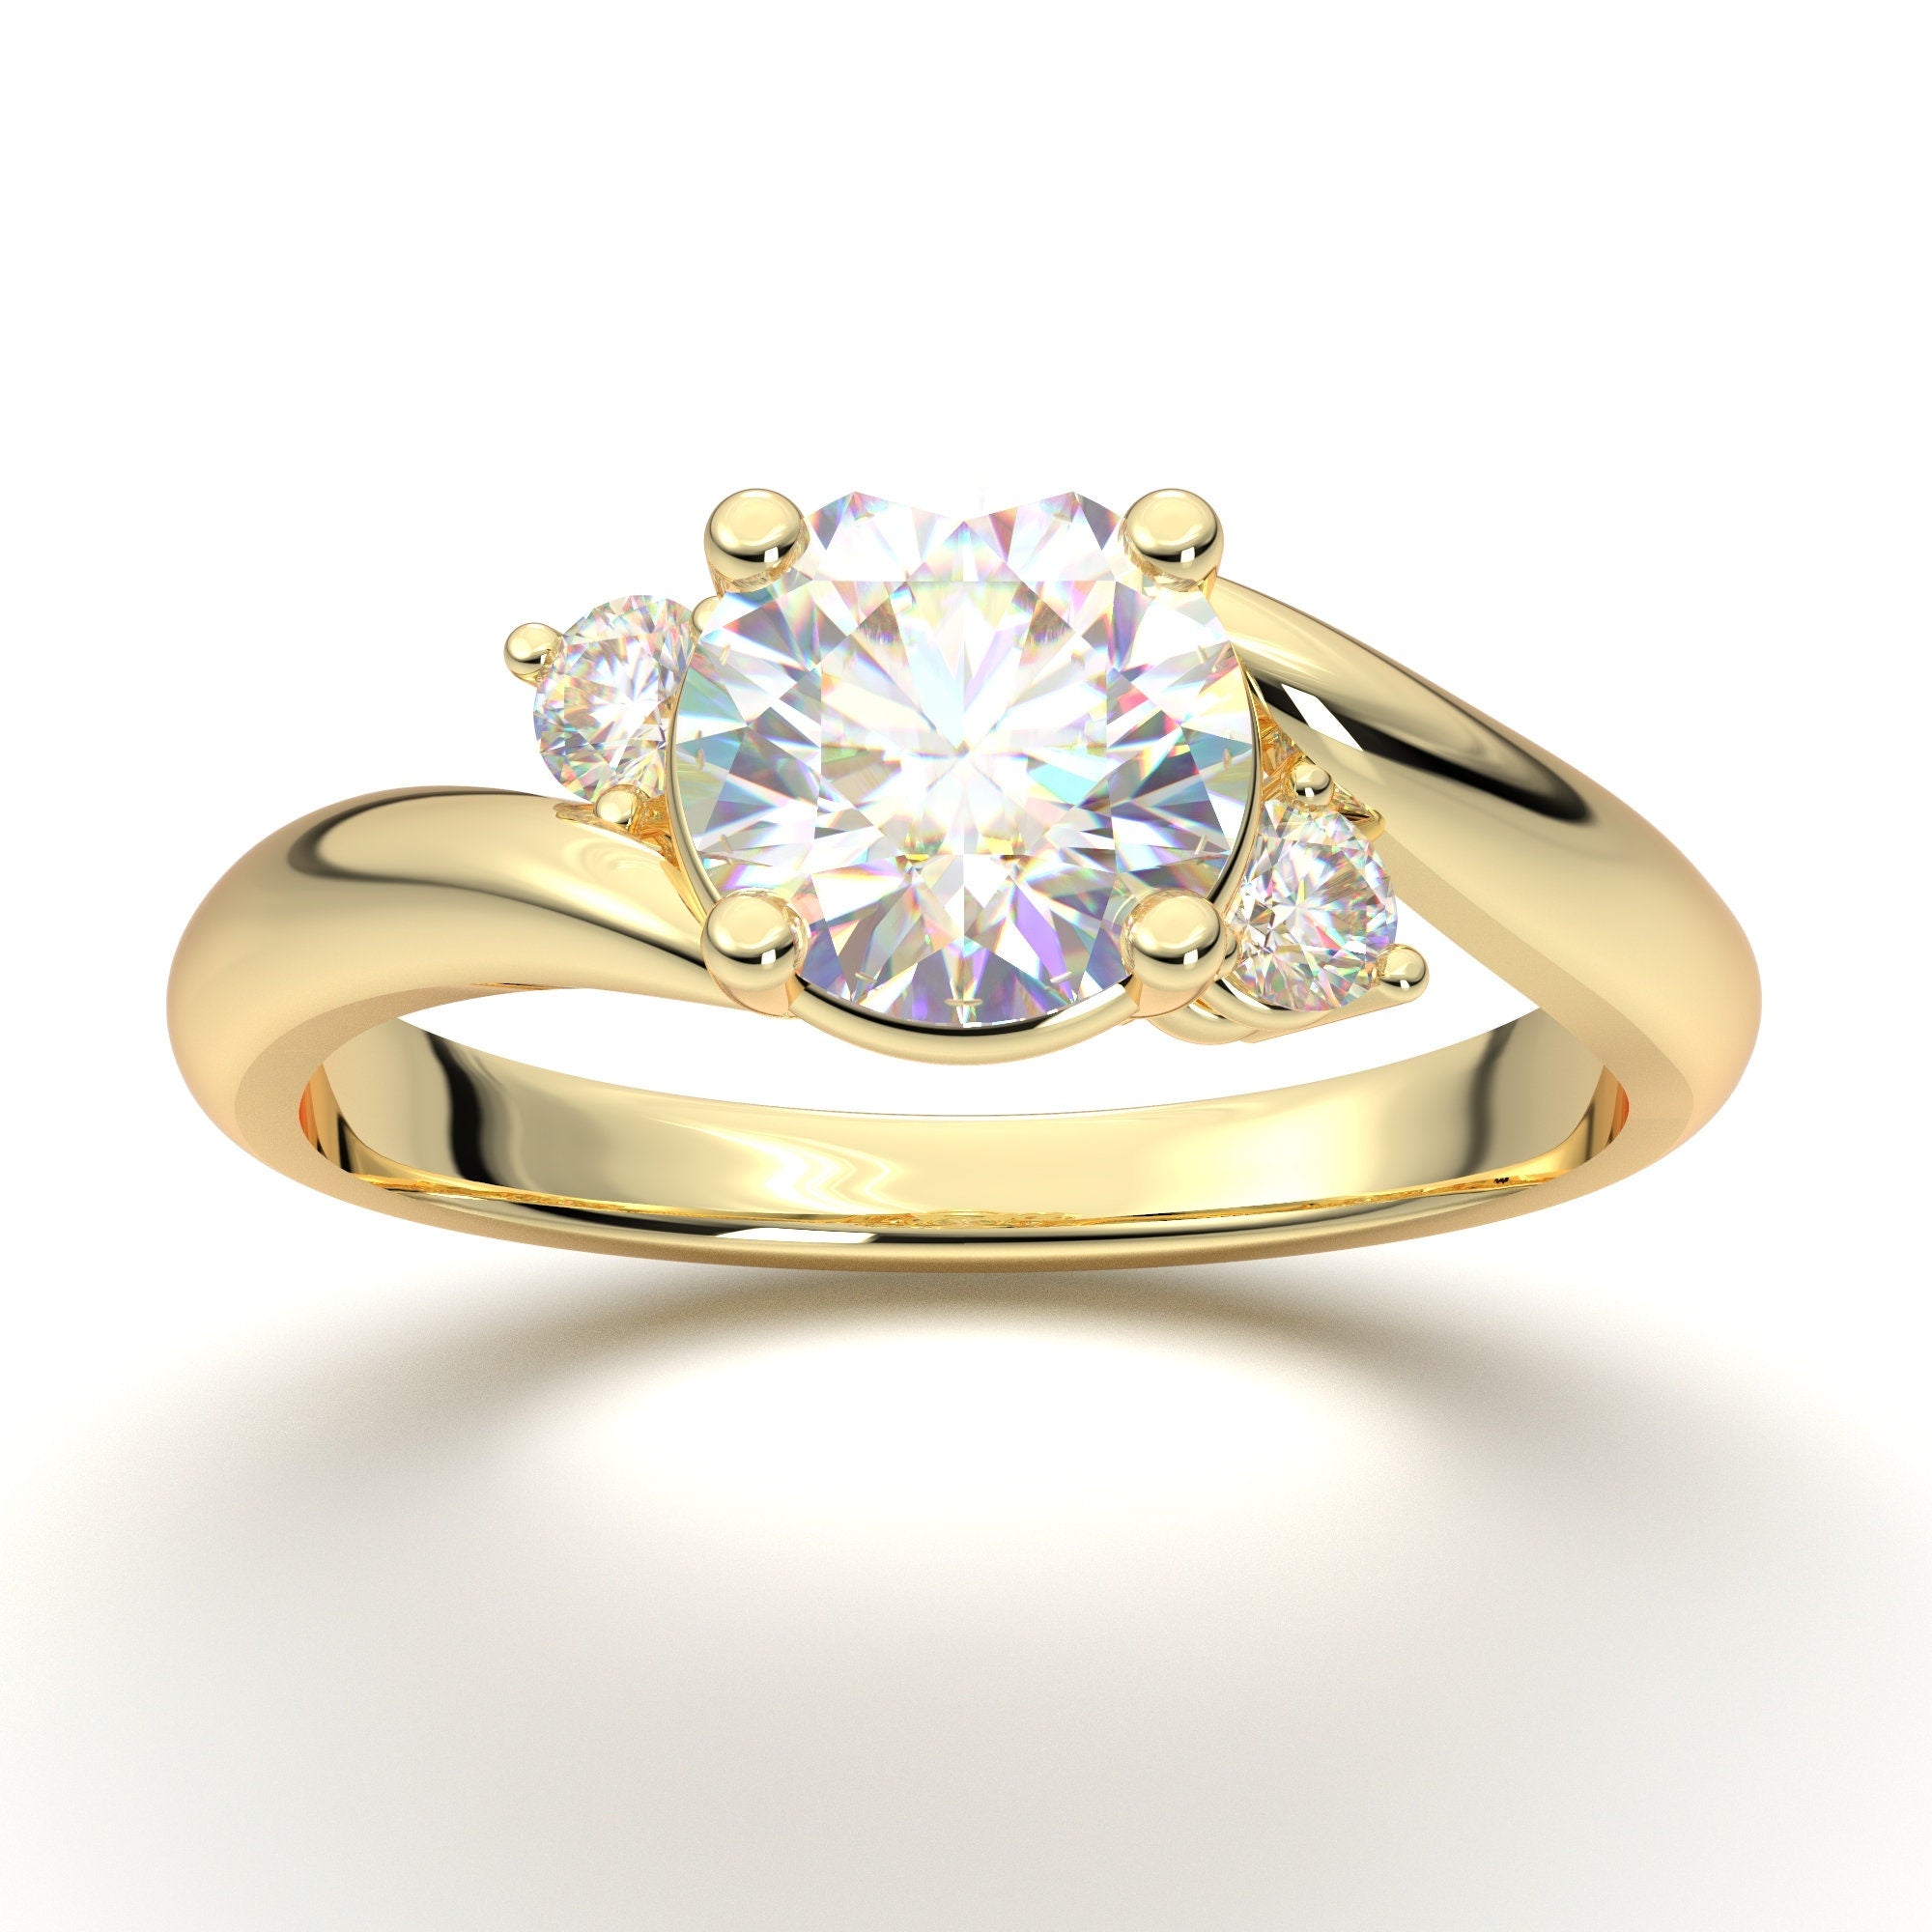 Buy Diamond Ring in India | Chungath Jewellery Online- Rs. 41,900.00